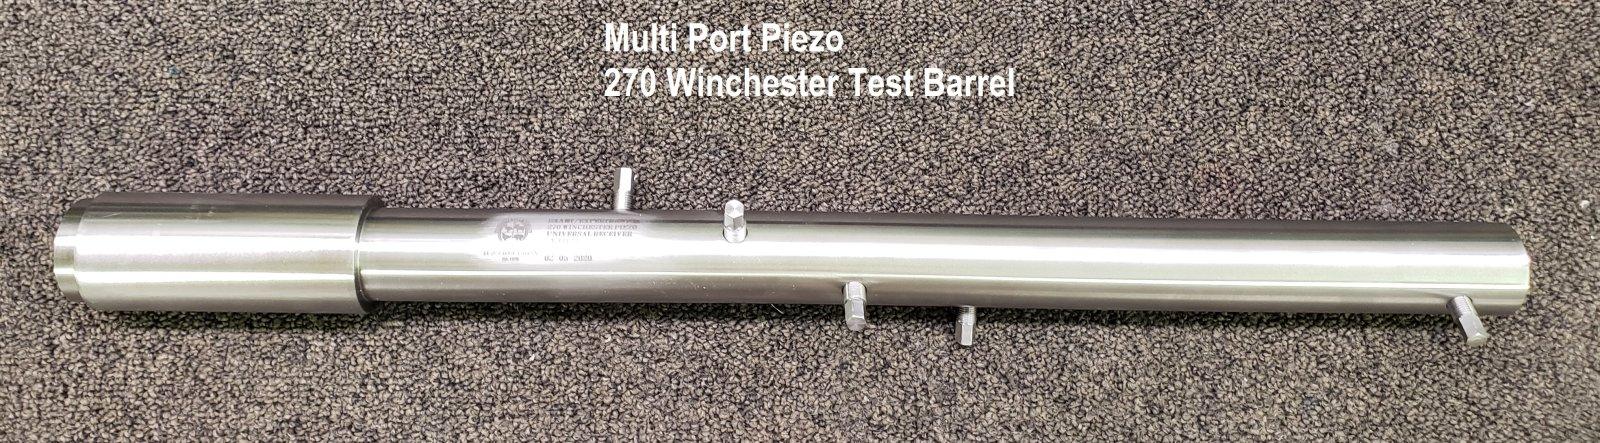 H-S Precision Multi Port Piezo Barrel2.jpg